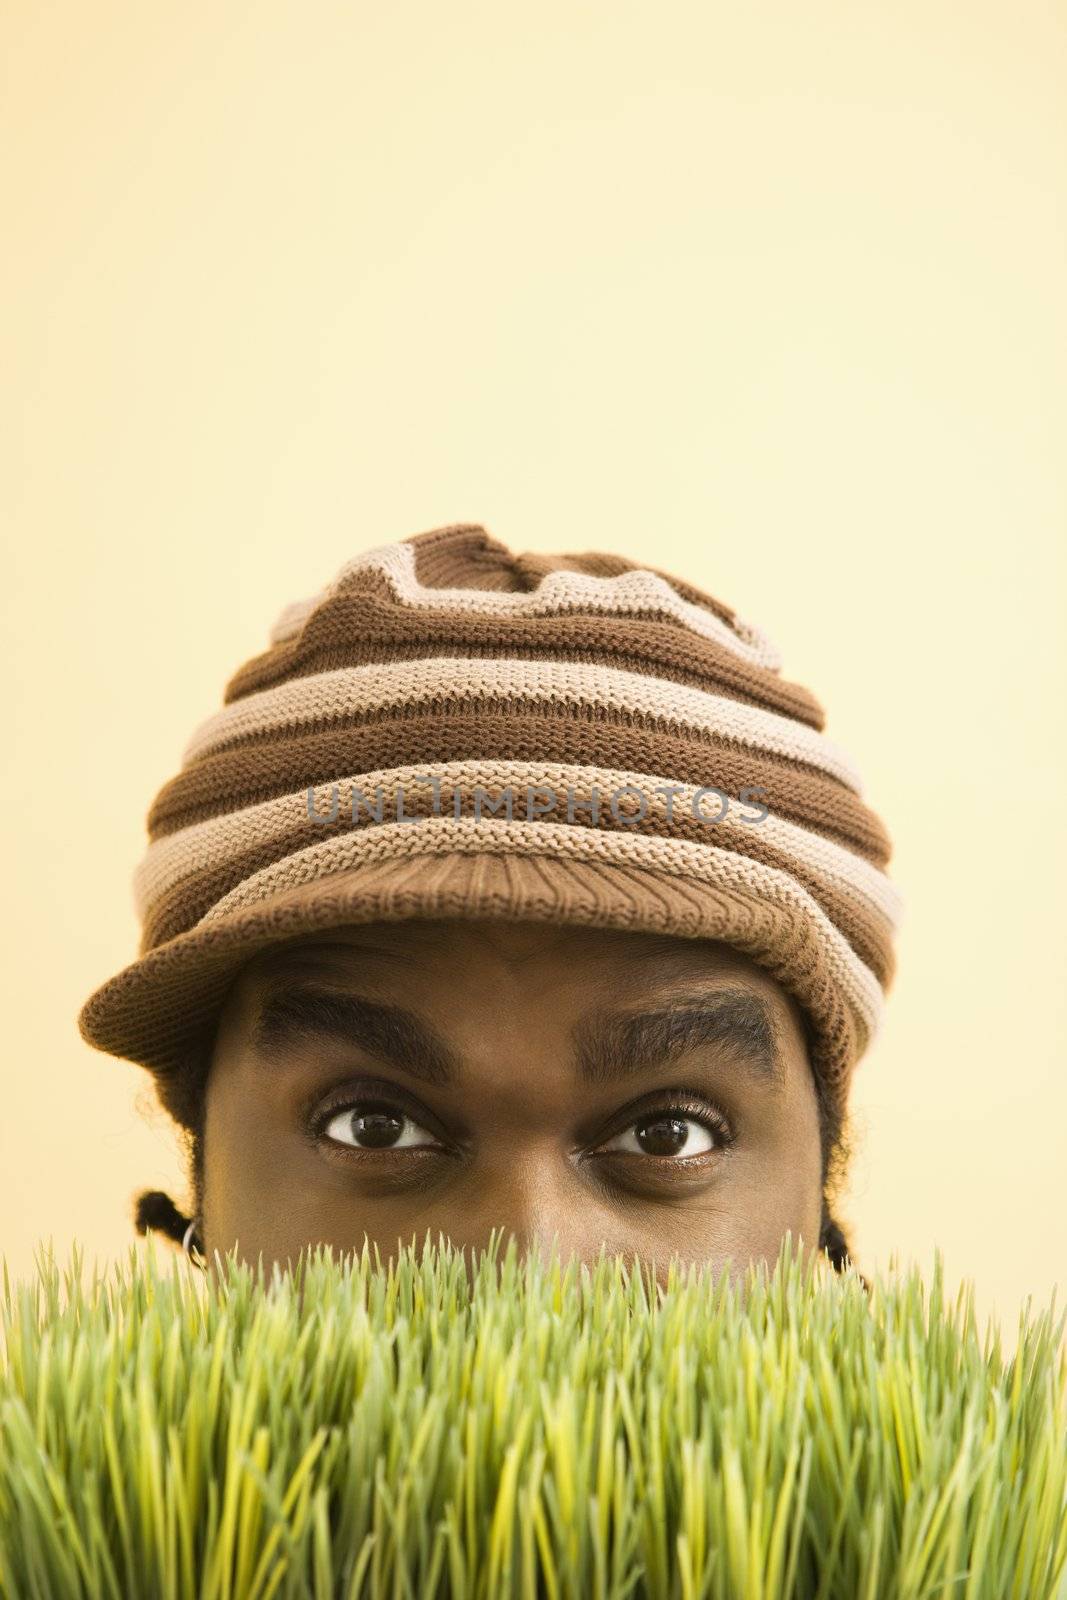 Man hiding in grass. by iofoto